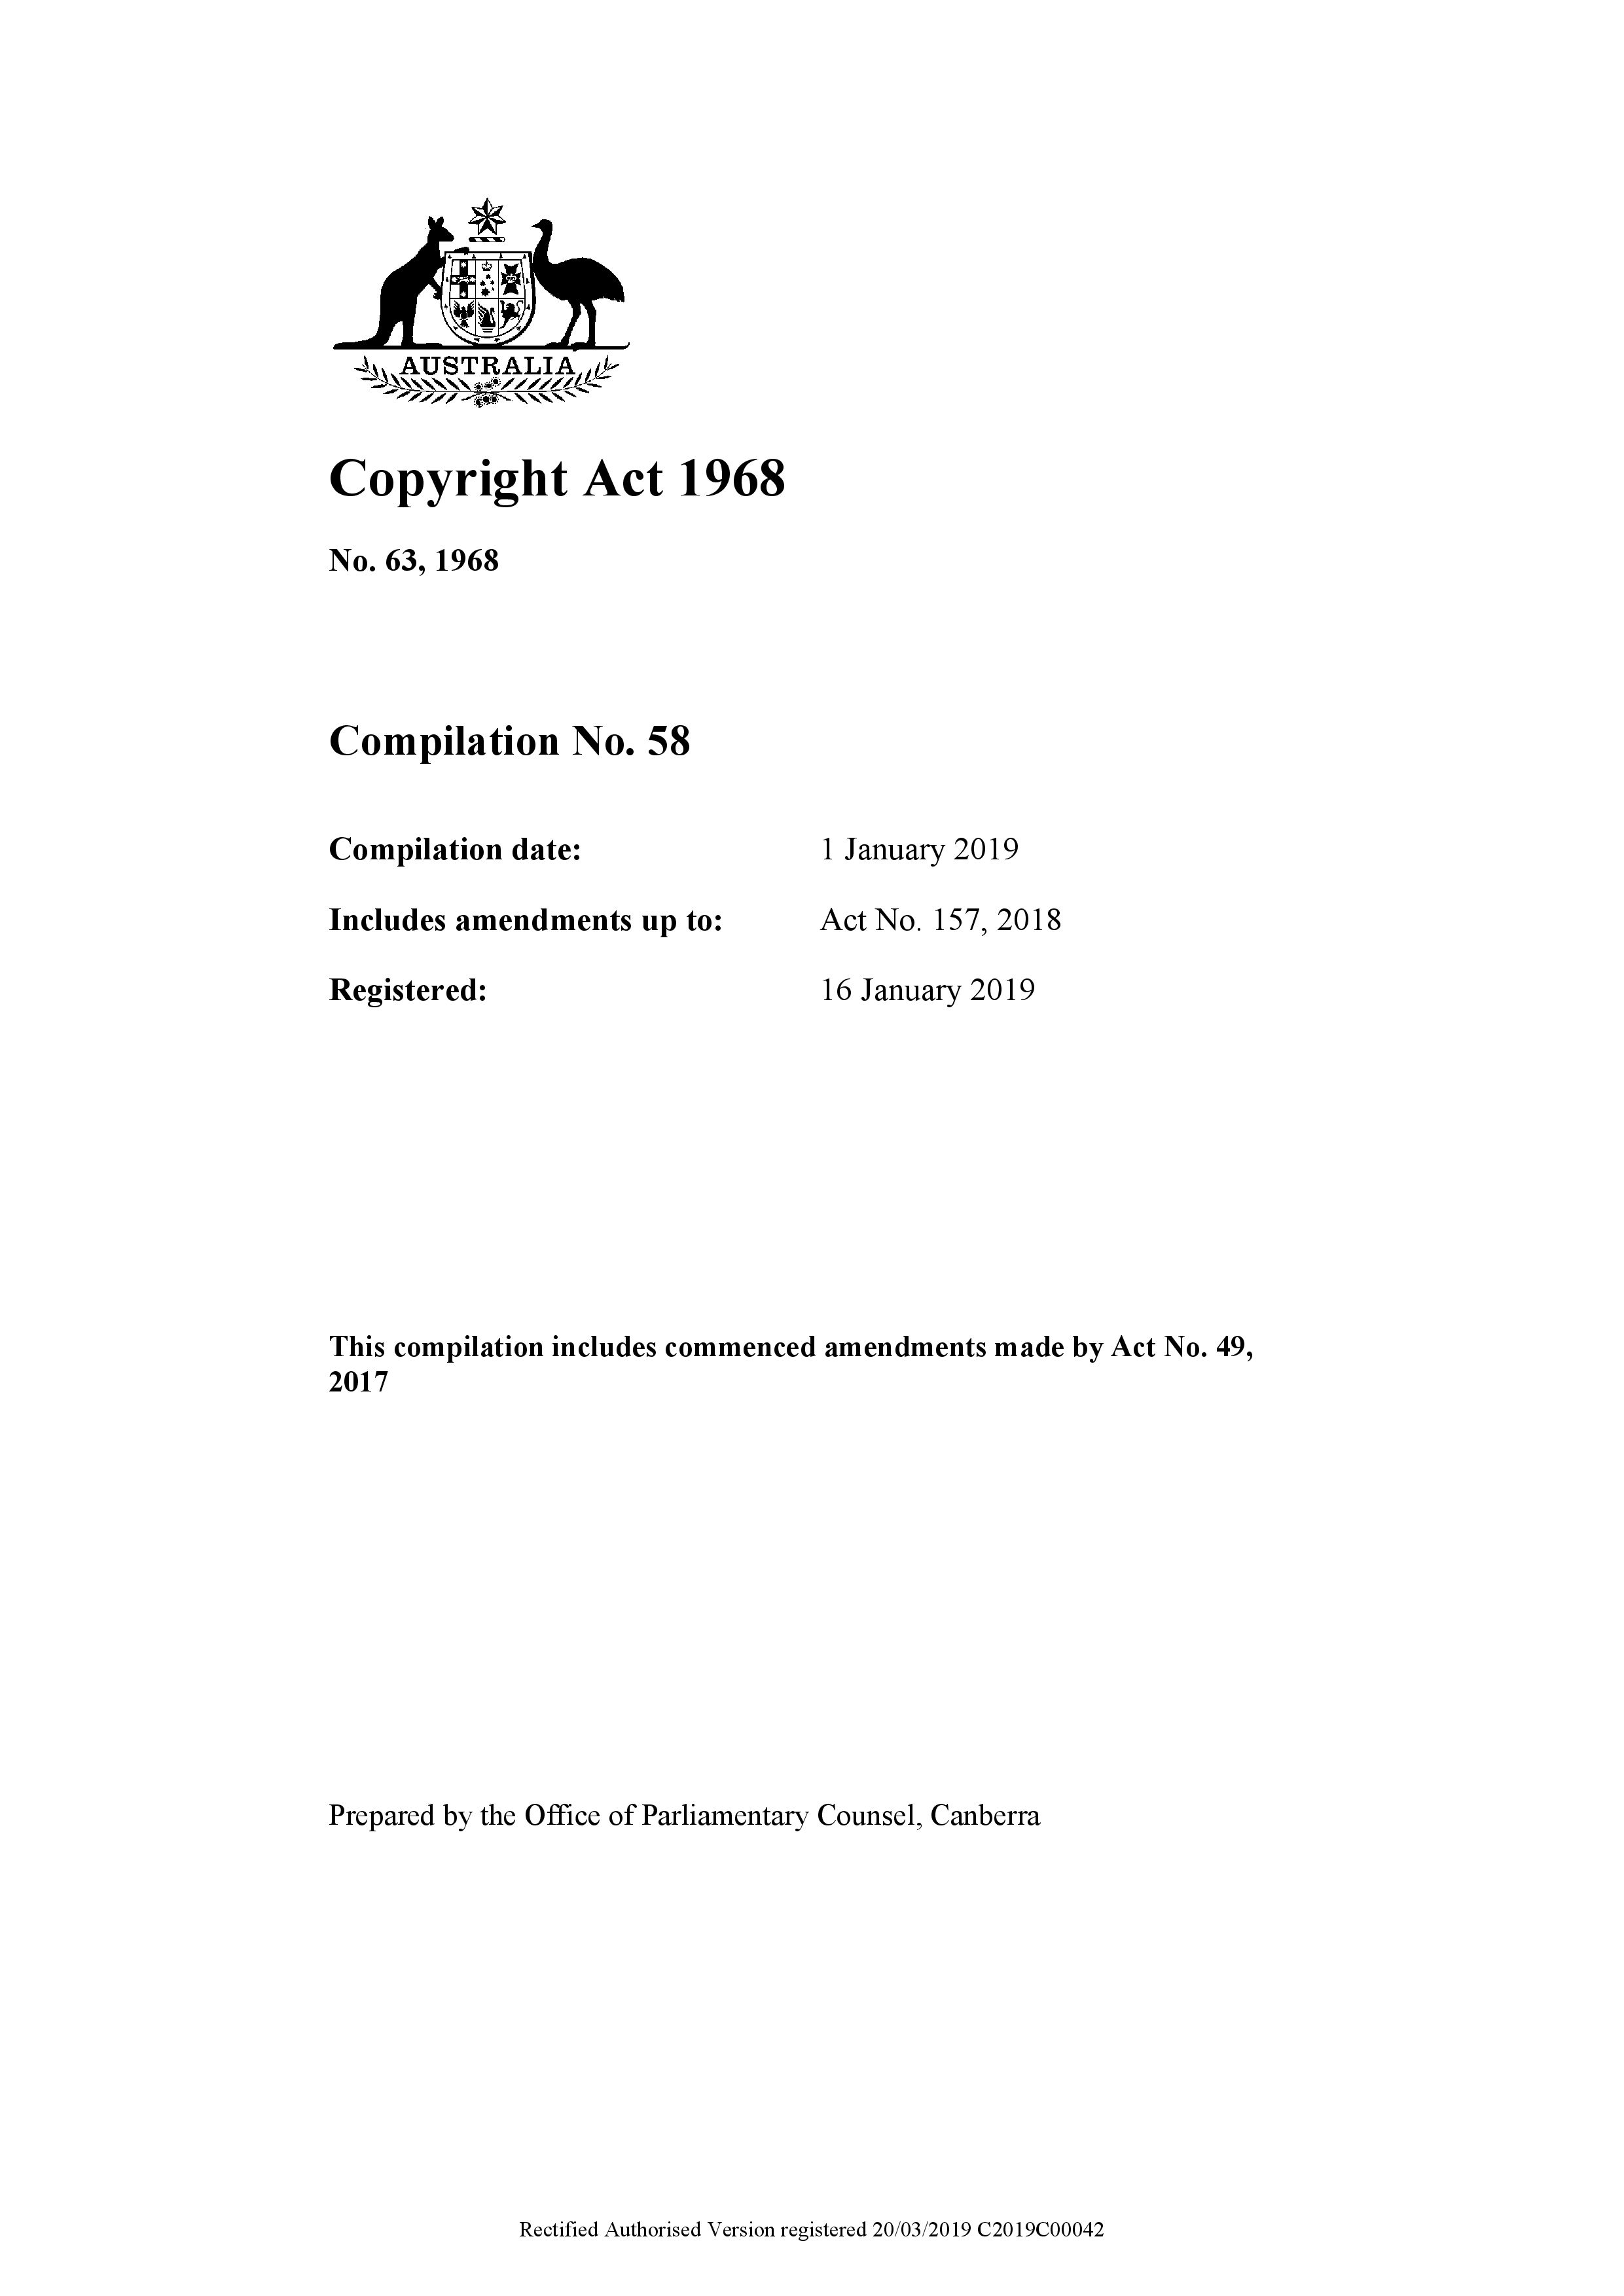 Australian Copyright Act 1968